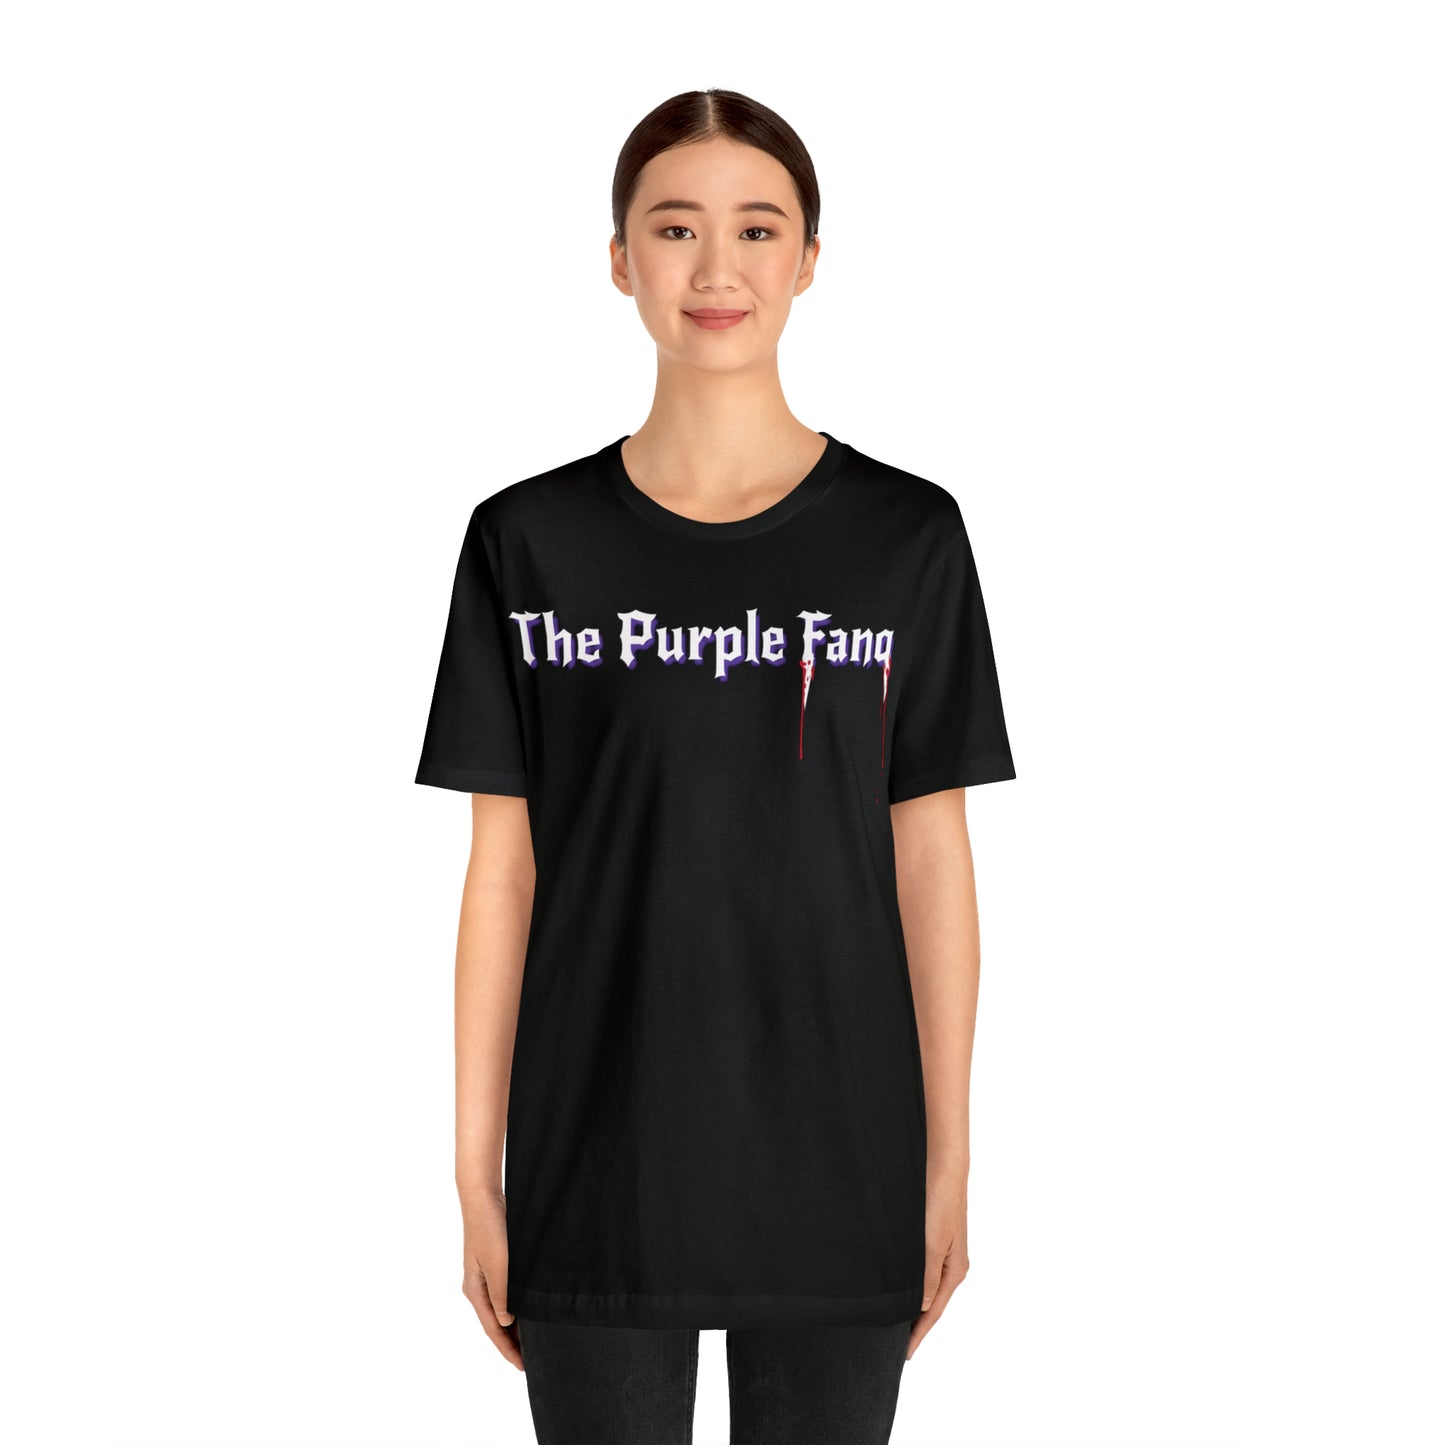 Das Purple Fang Unisex T-Shirt